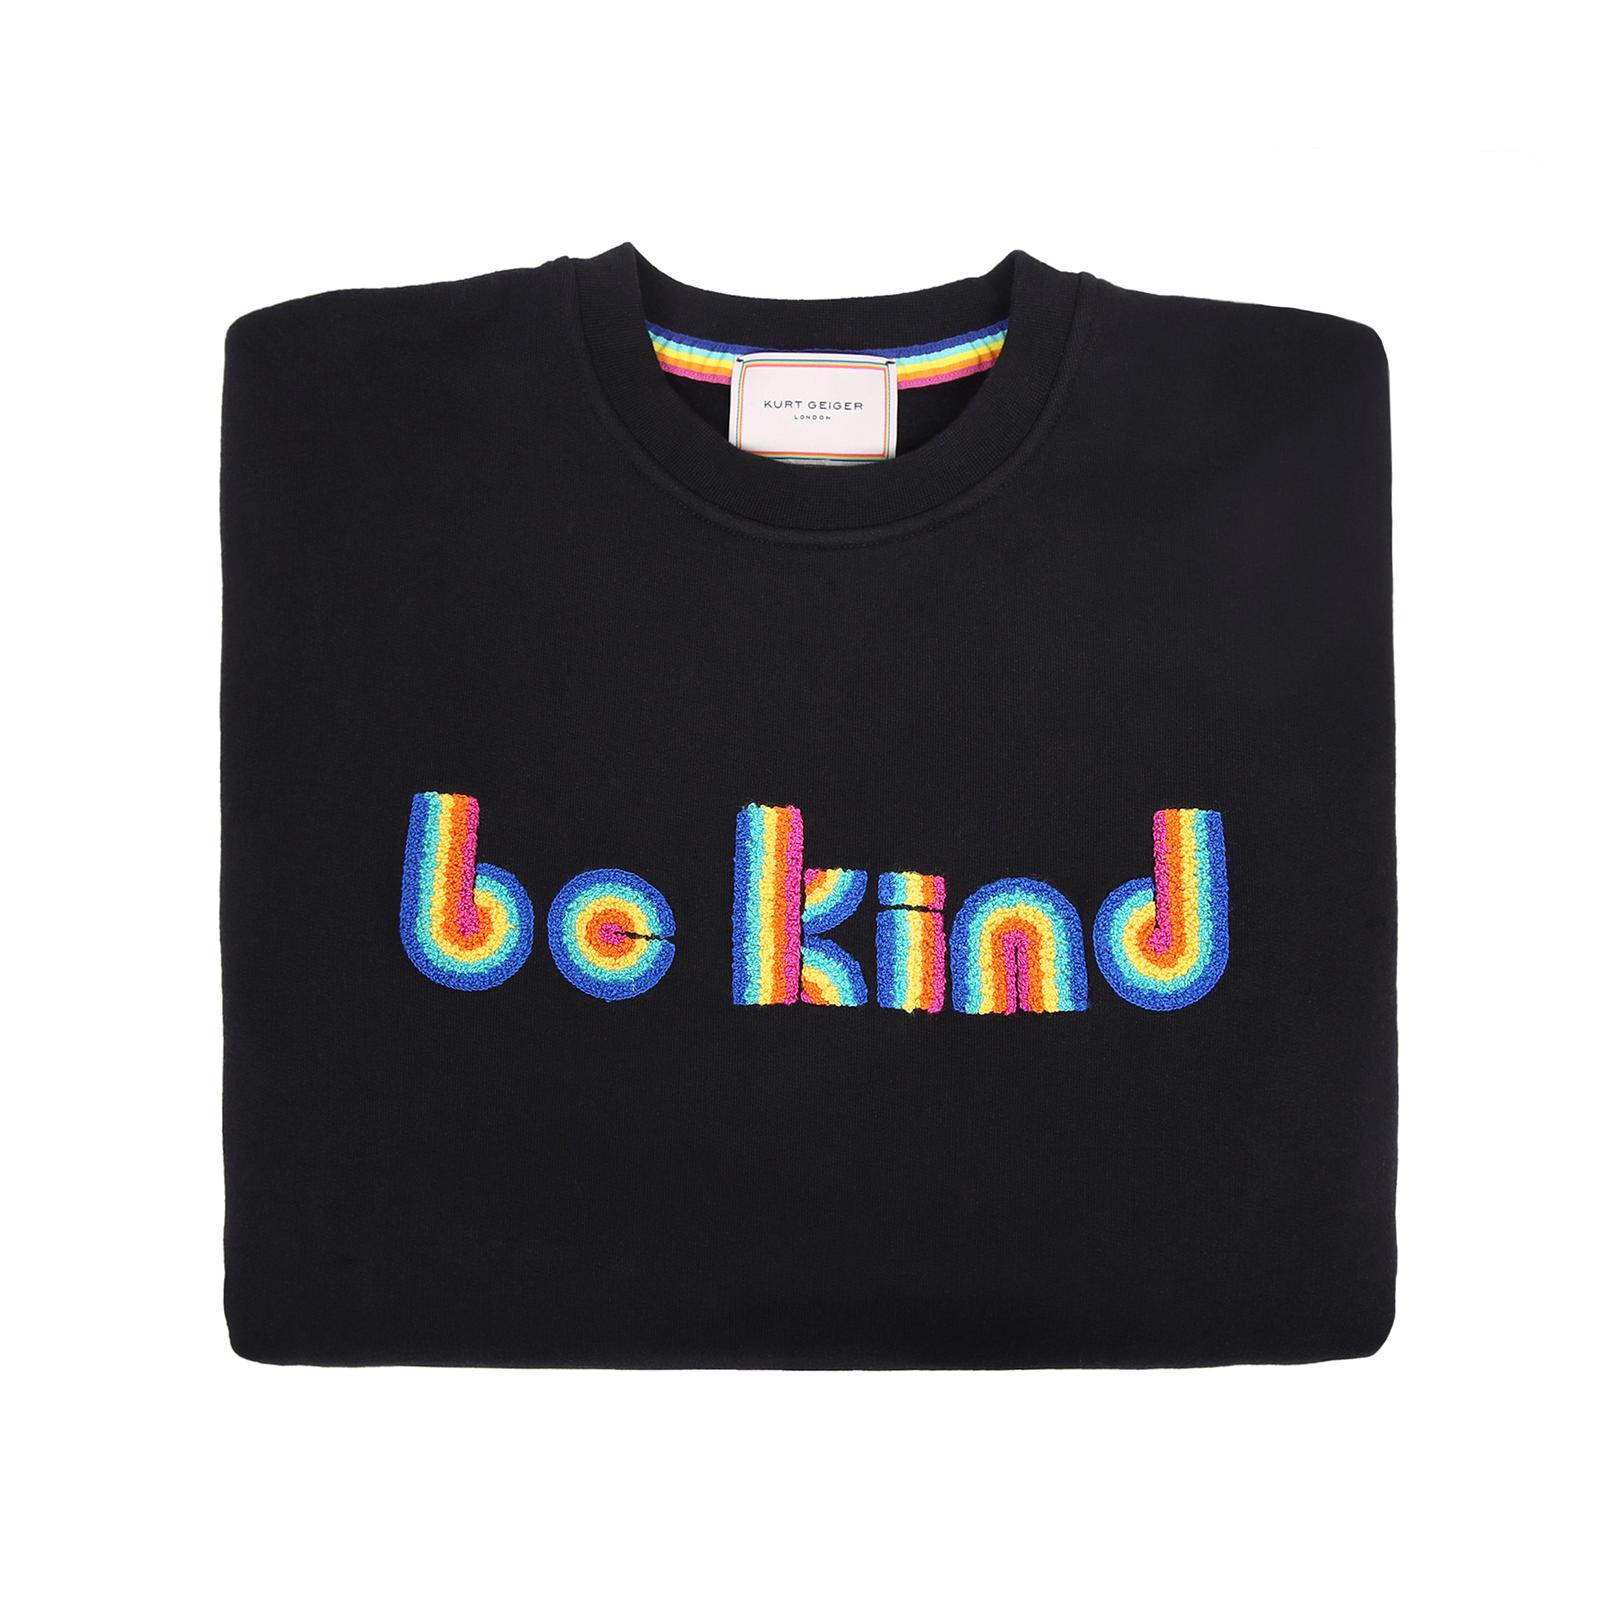 Be Kind Sweatshirt Unisex Black Cotton Sweatshirt By Kurt Geiger London ...